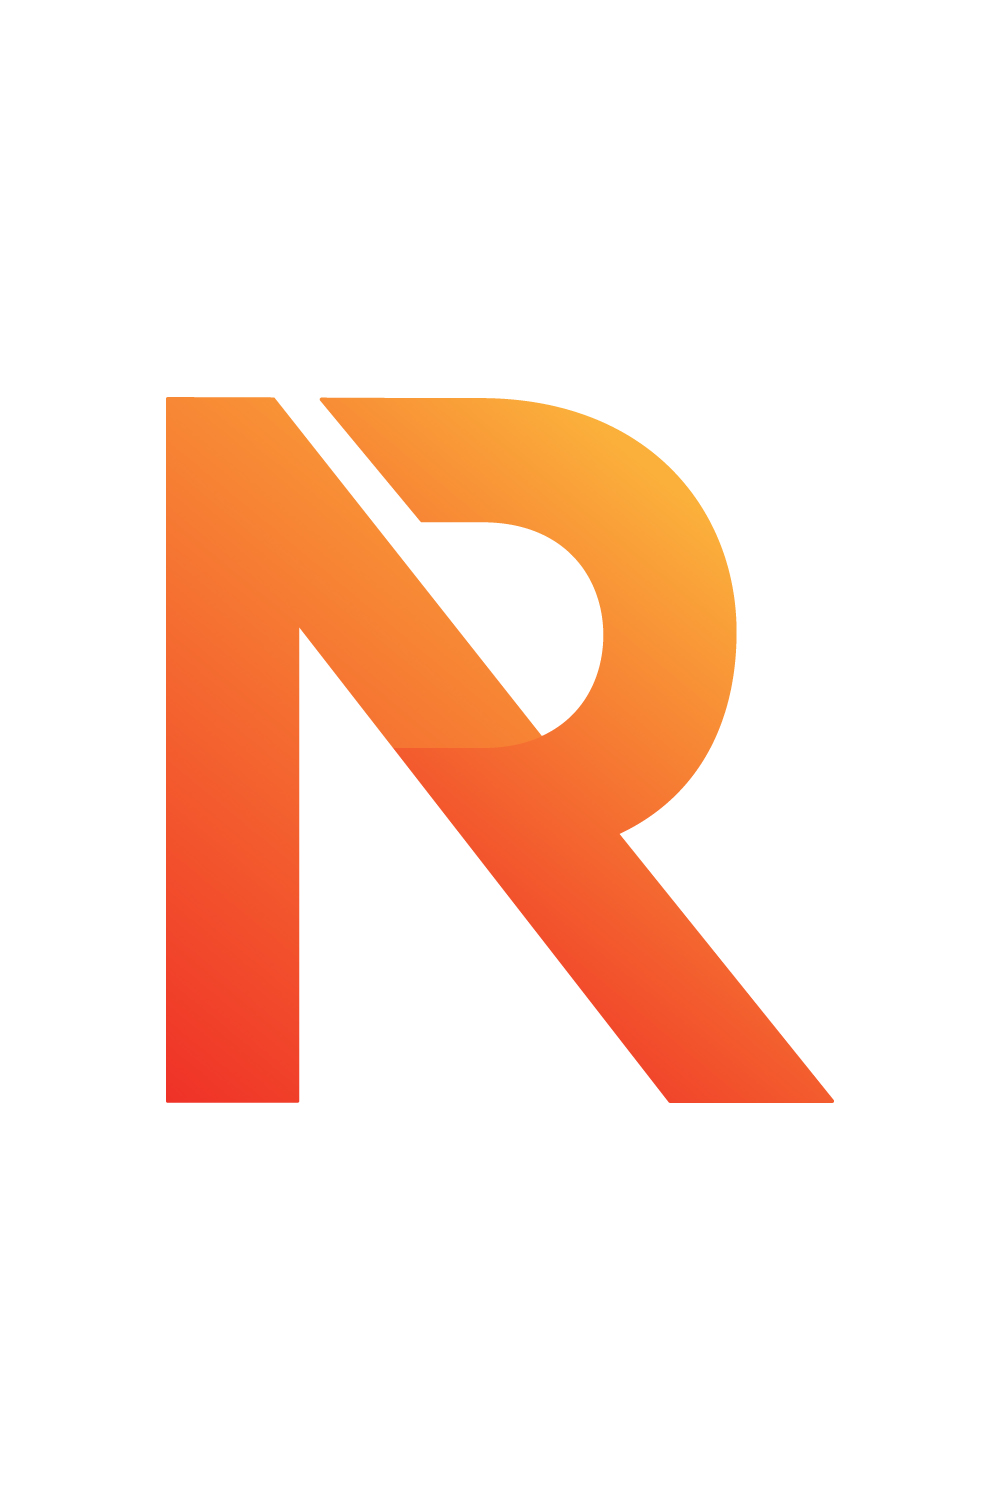 Initials R letters logo design vector images R logo orange color best company identity pinterest preview image.